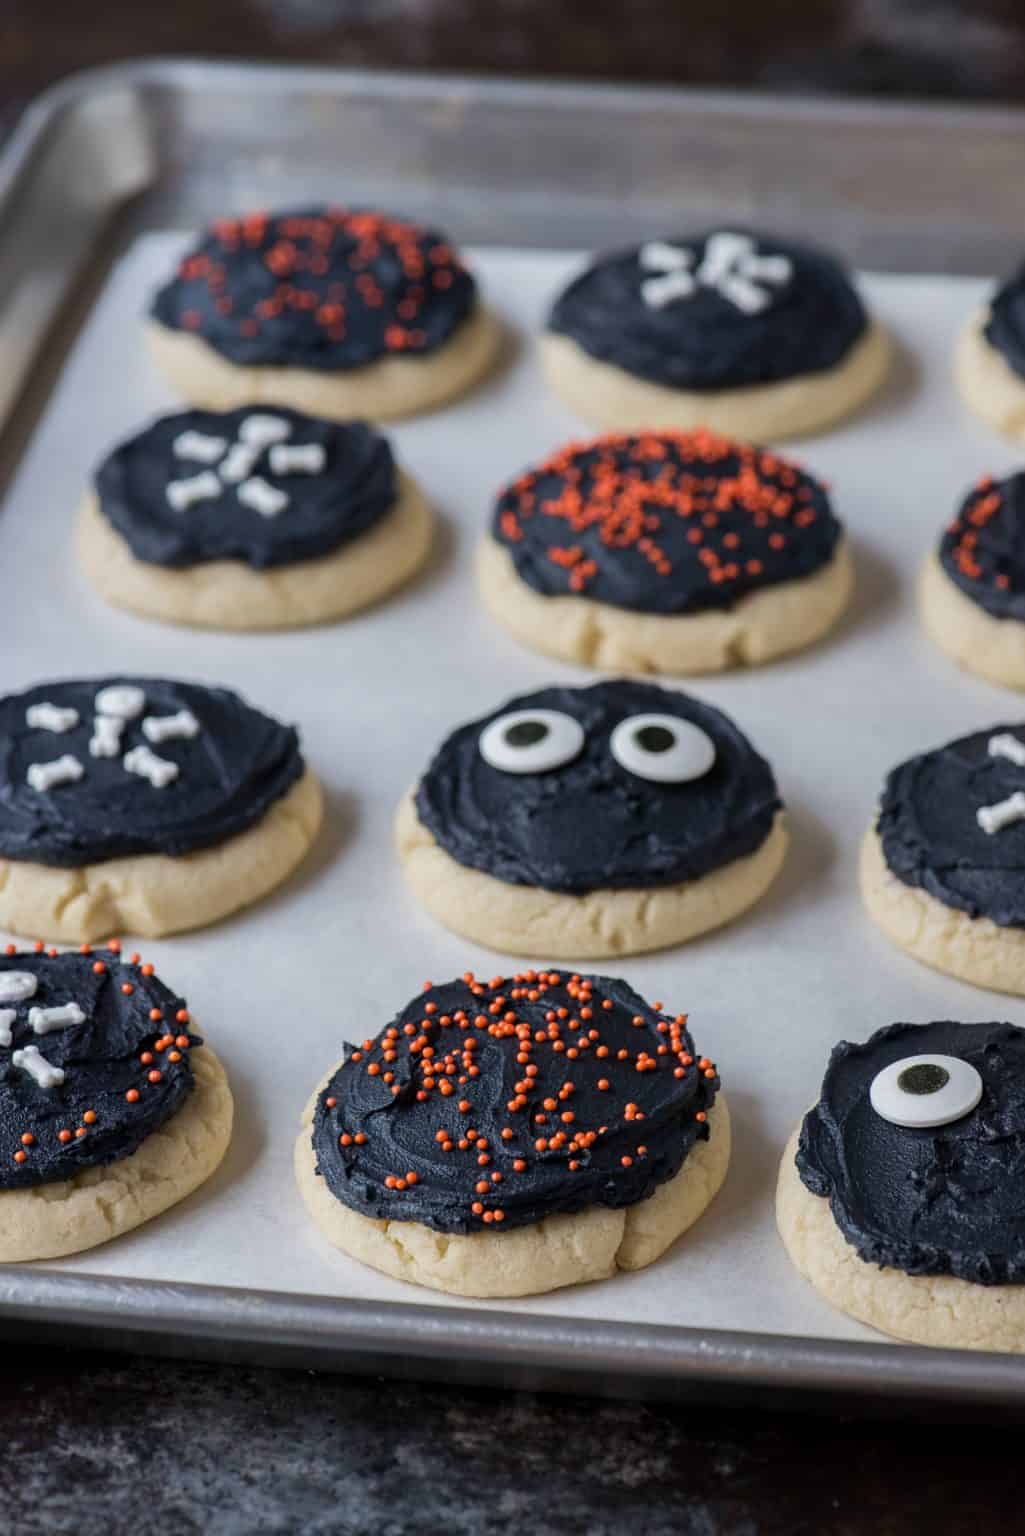 Frosted Halloween Sugar Cookies - lofthouse halloween cookies!